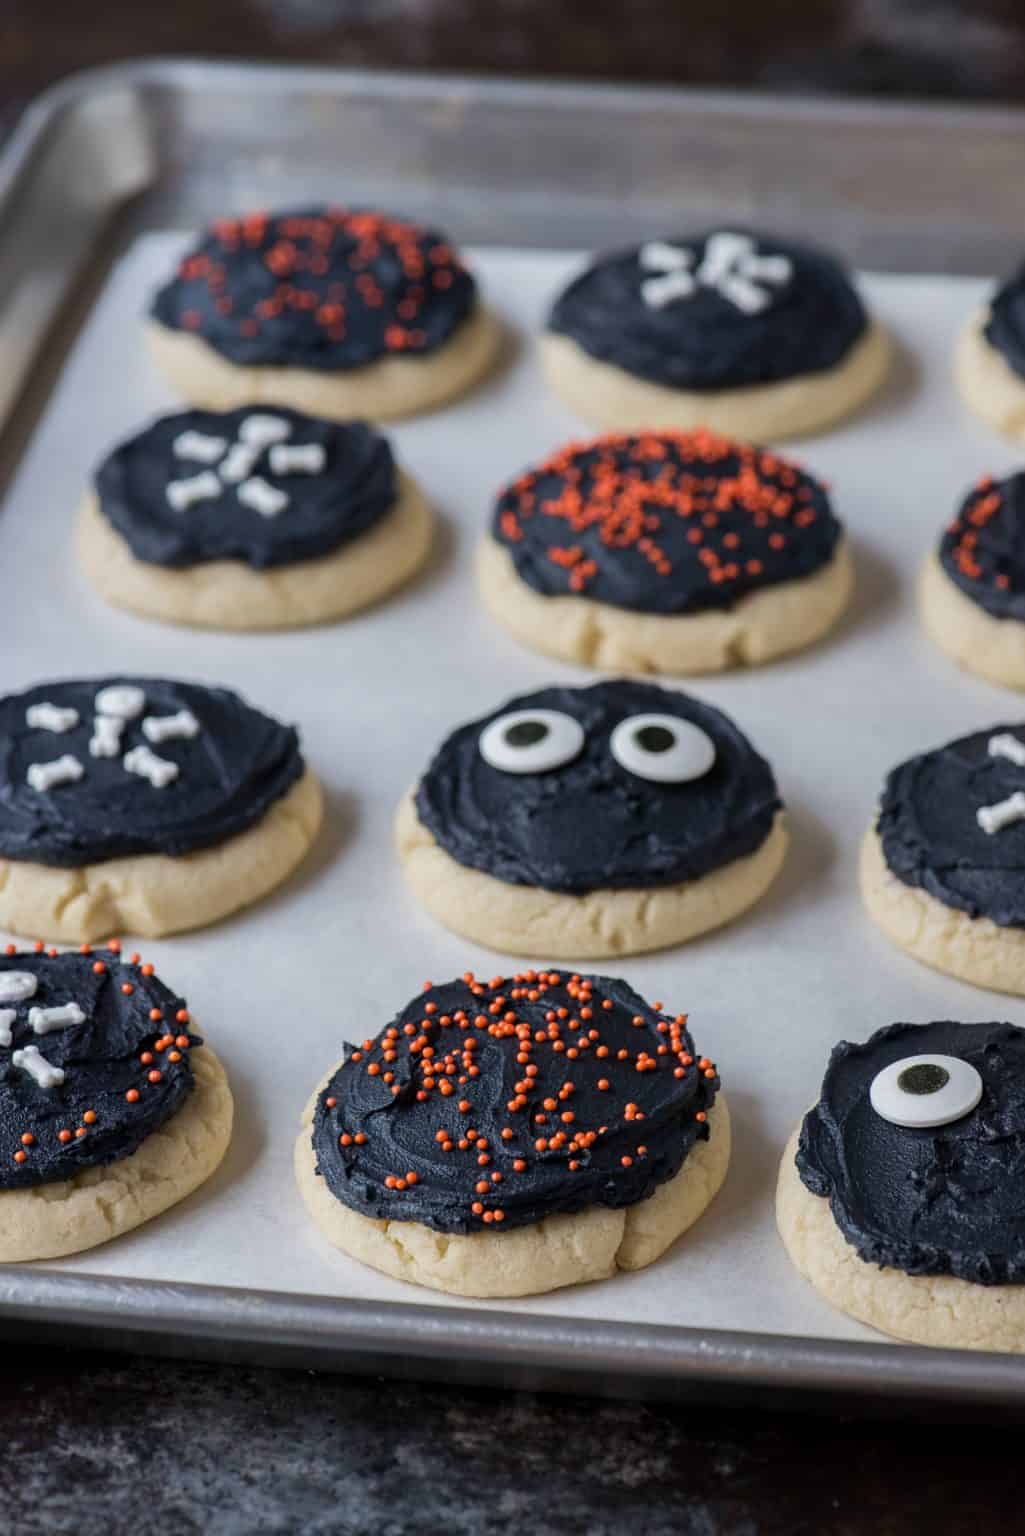 Frosted Halloween Sugar Cookies - lofthouse halloween cookies!